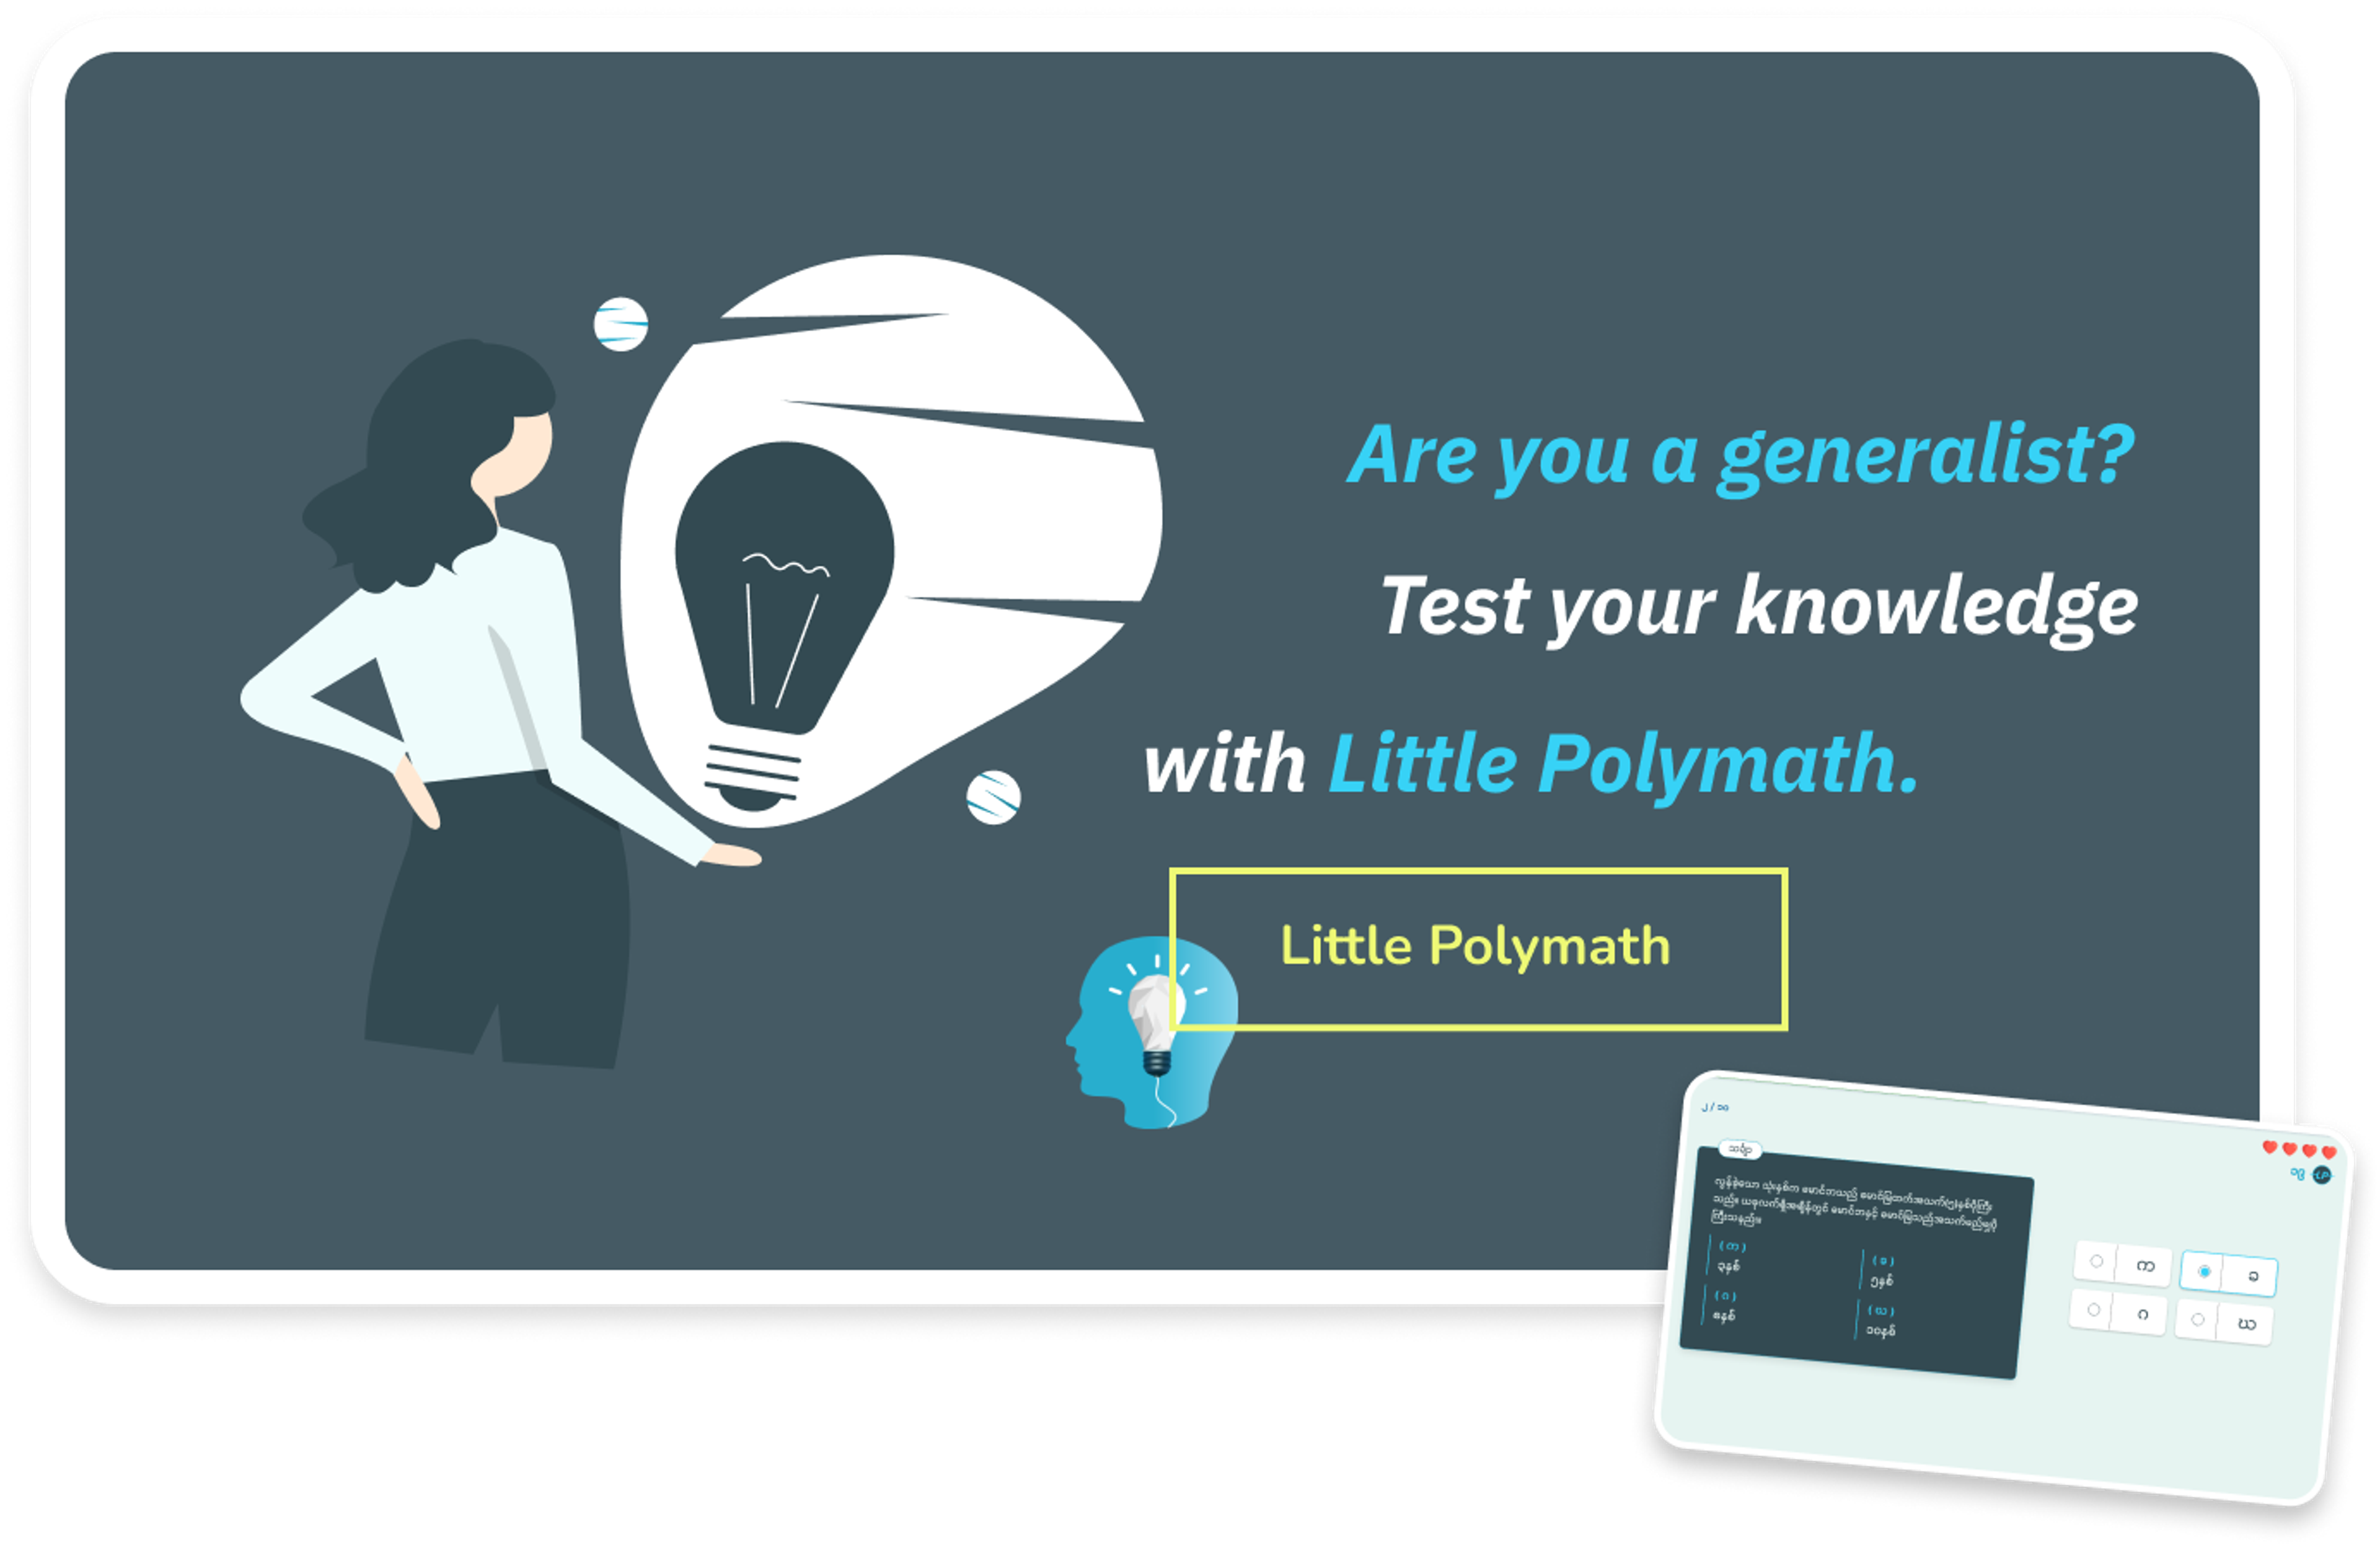 Little Polymath project